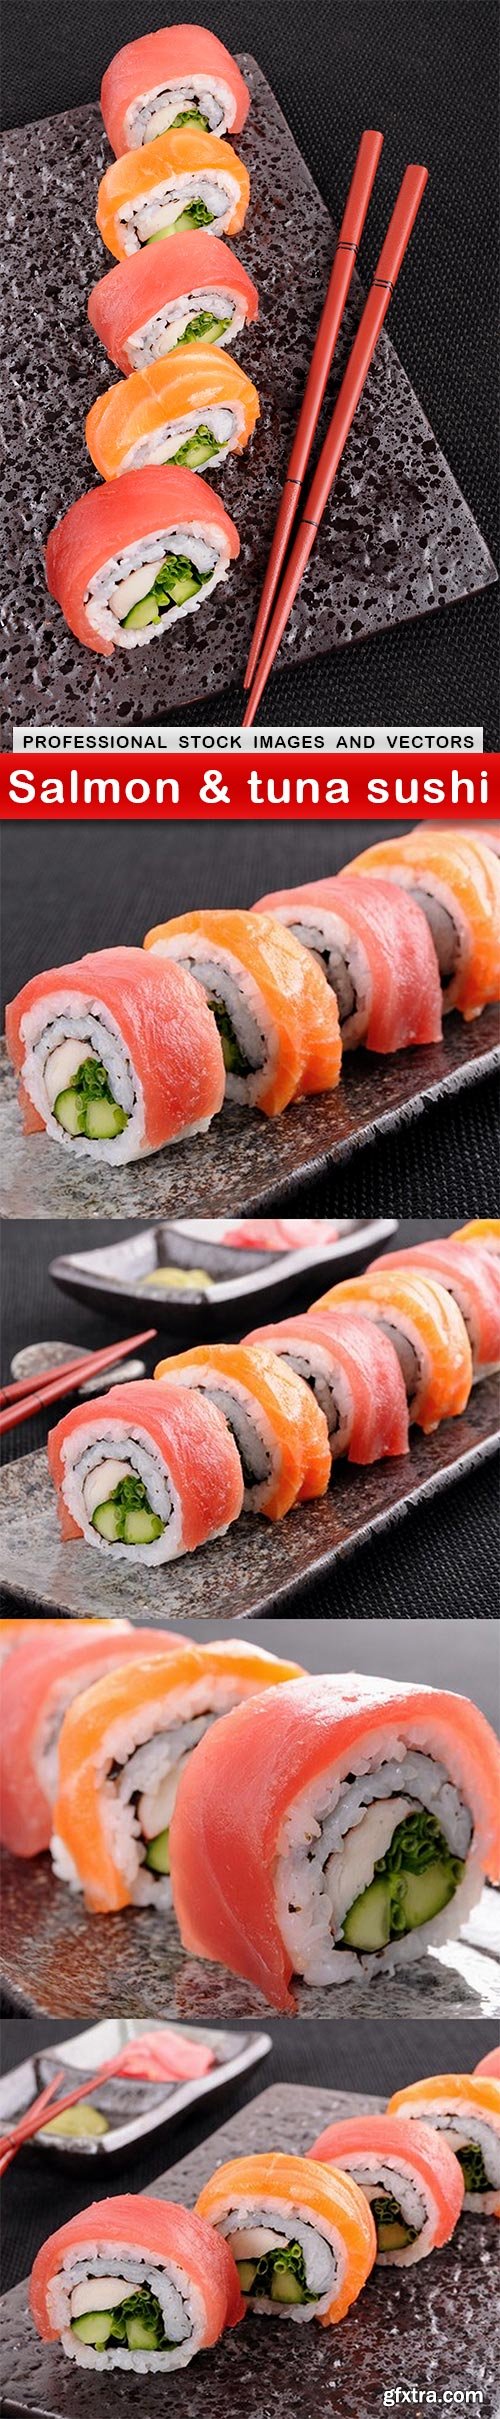 Salmon & tuna sushi - 5 UHQ JPEG